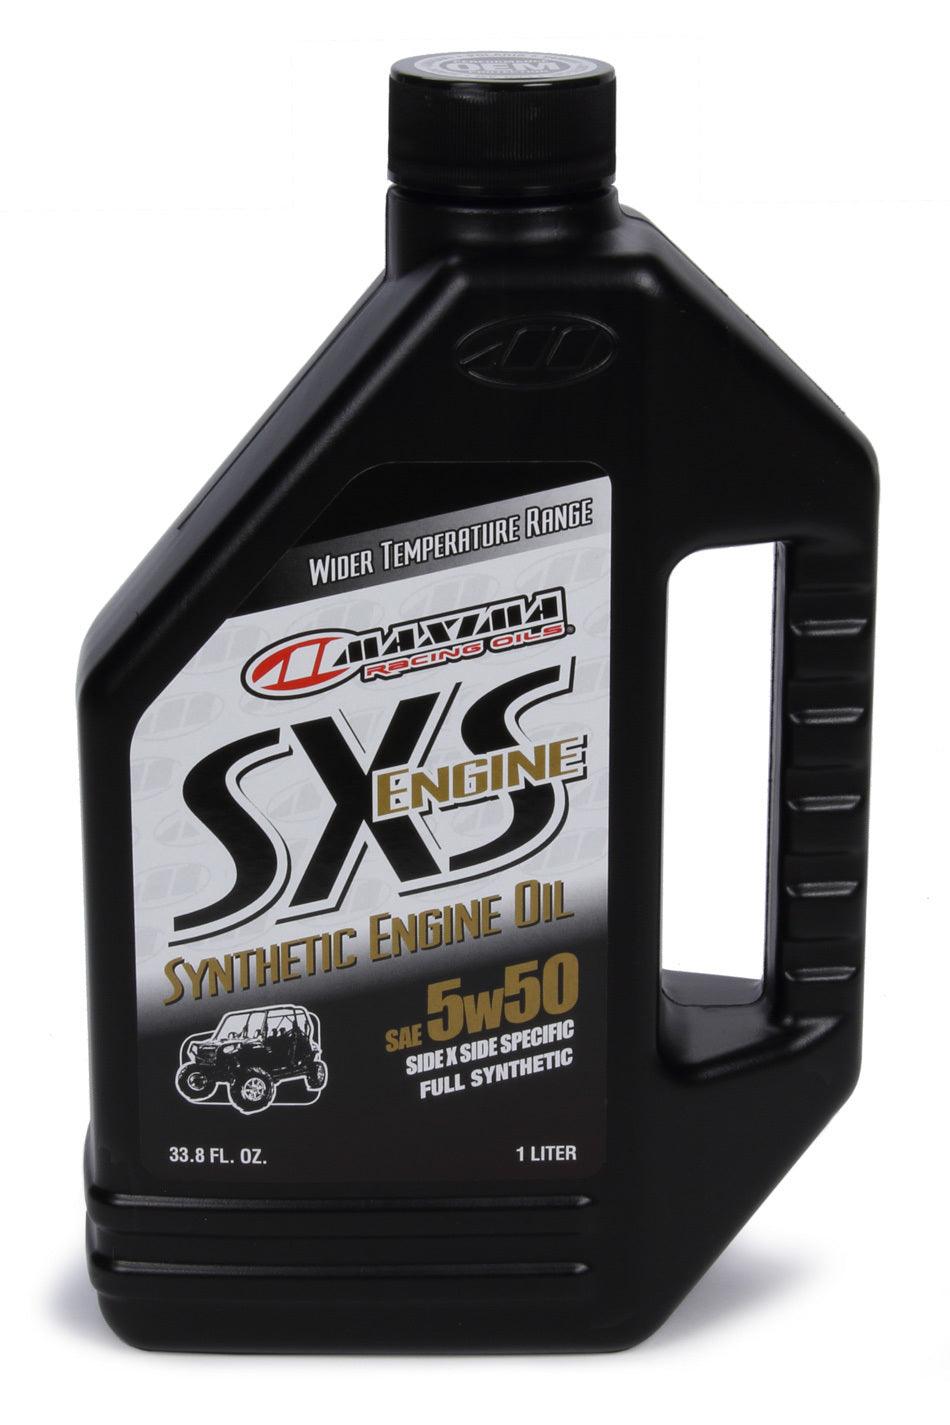 SXS Engine Full Syntheti c 5w50 1 Liter - Burlile Performance Products